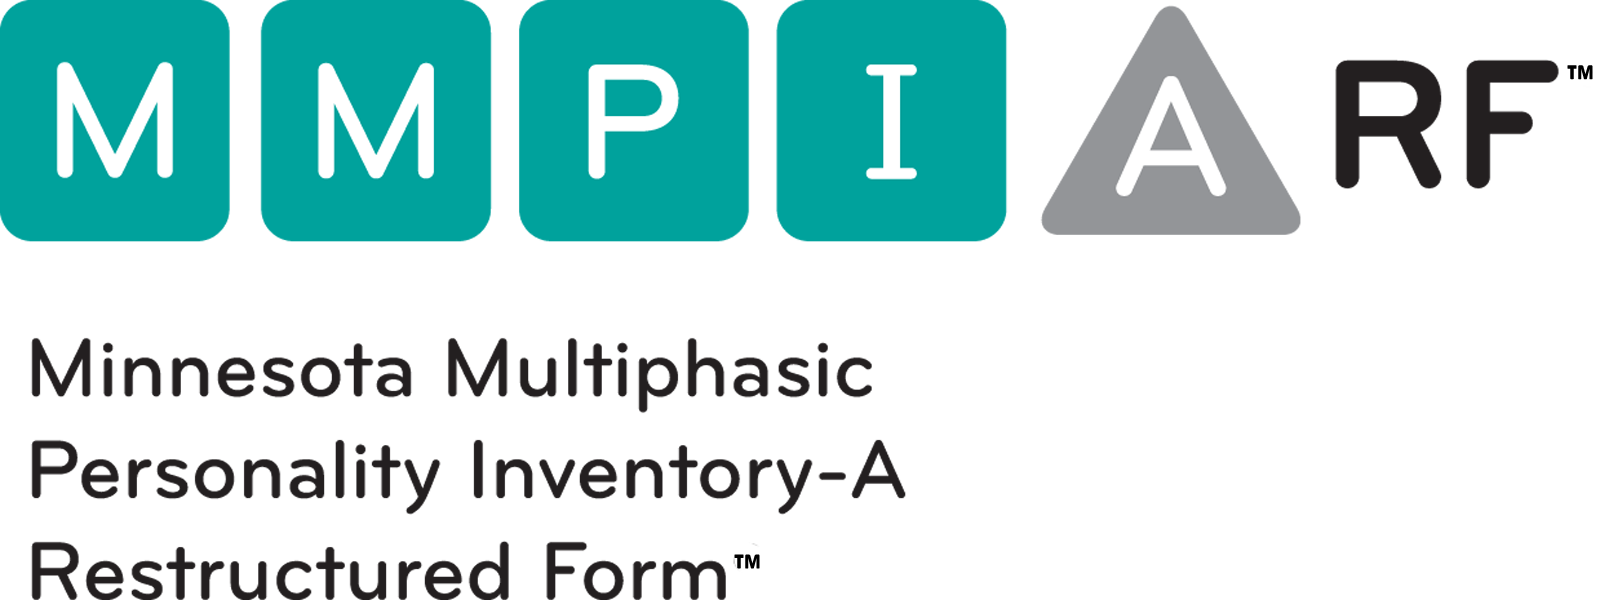 MMPI-A-RF Logo